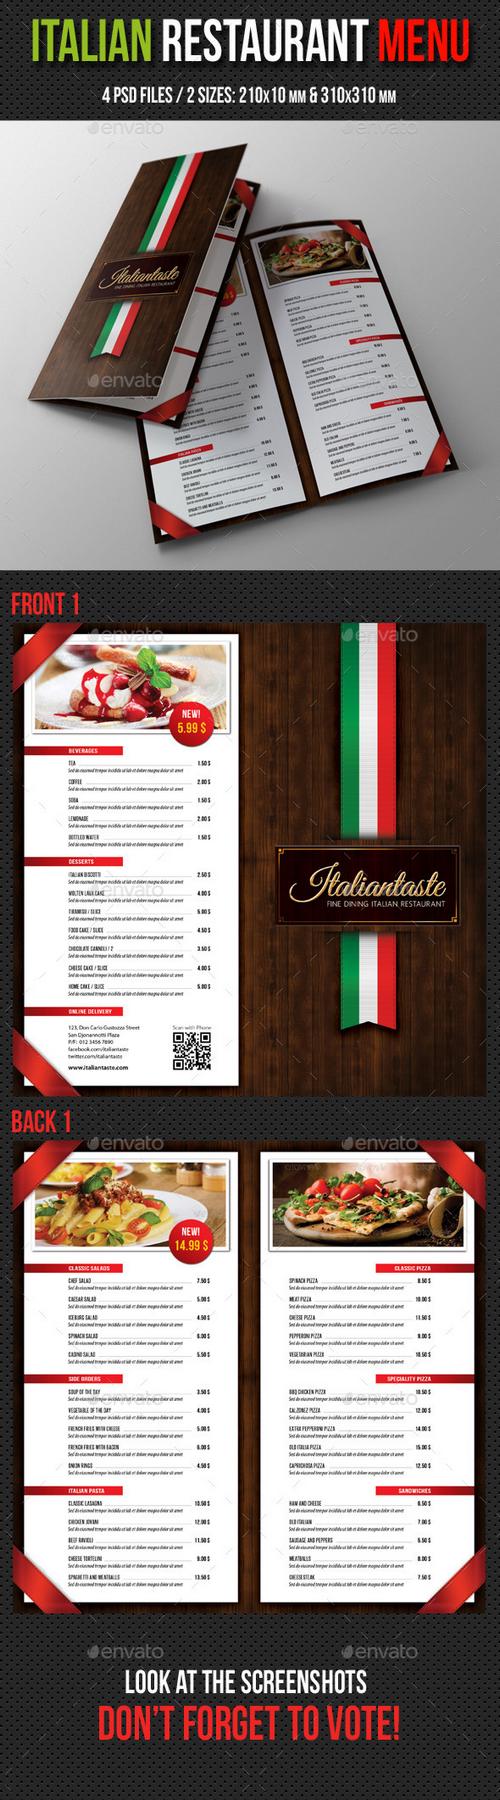 Graphicriver - Italian Restaurant Menu Brochure 10264044